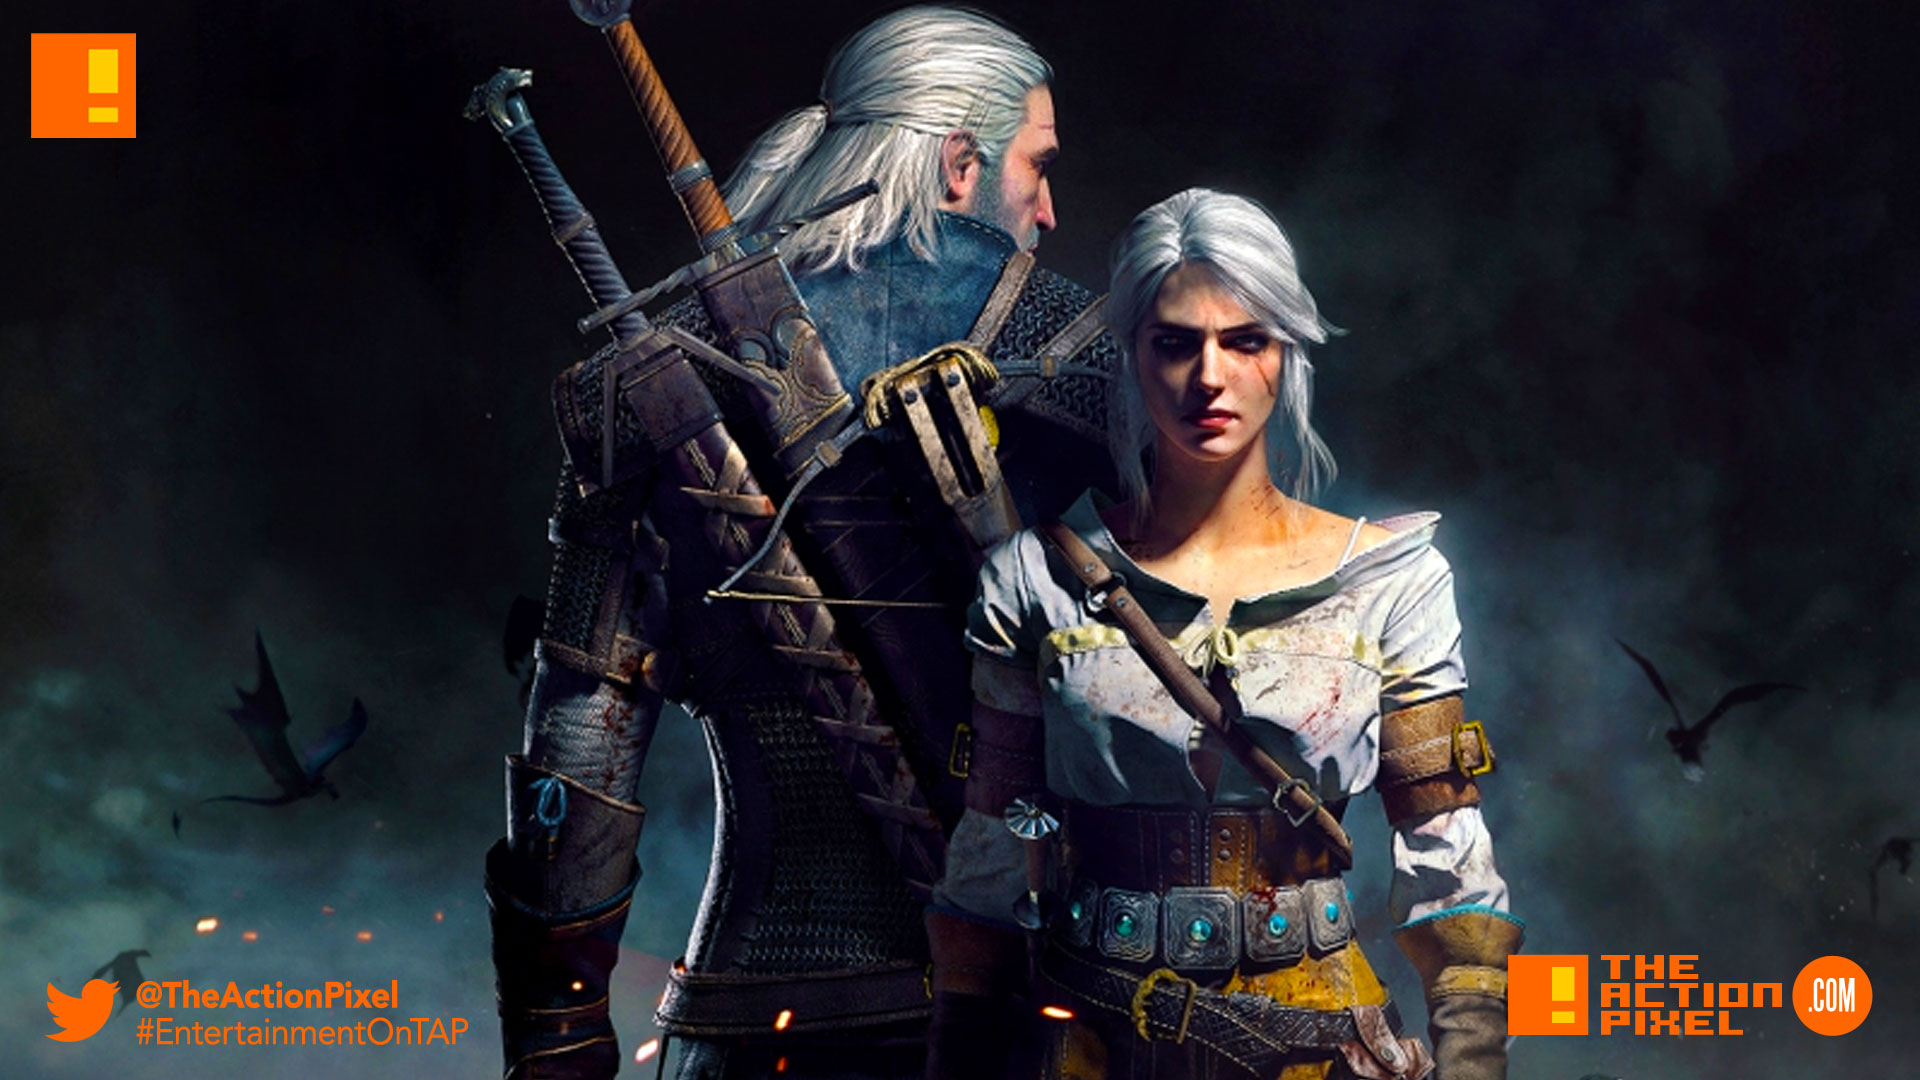 the witcher 3: wild hunt, Geralt, netflix, entertainment on tap, the action pixel, @theactionpixel